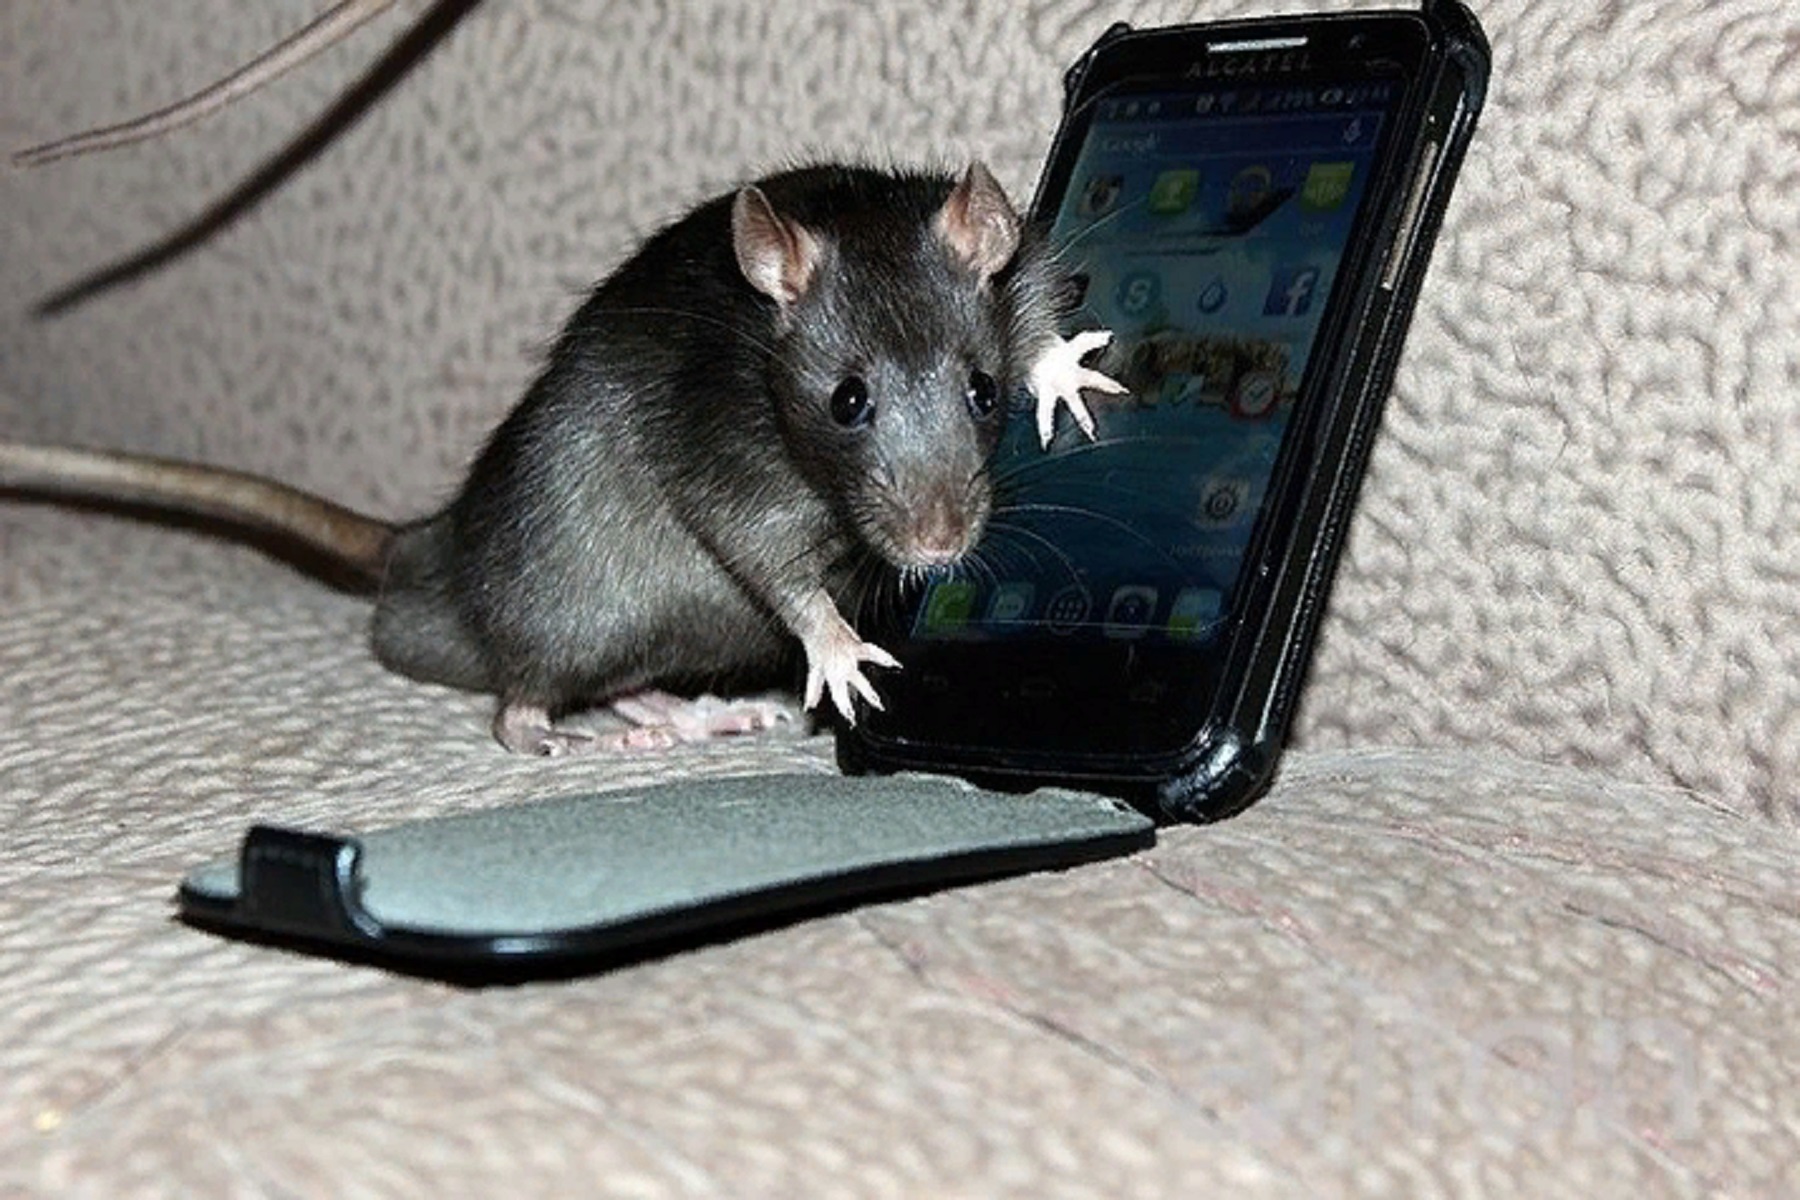 Миллер мыши. Мышка для телефона. Мышь с телефоном. Наглая мышь. Наглая крыса.